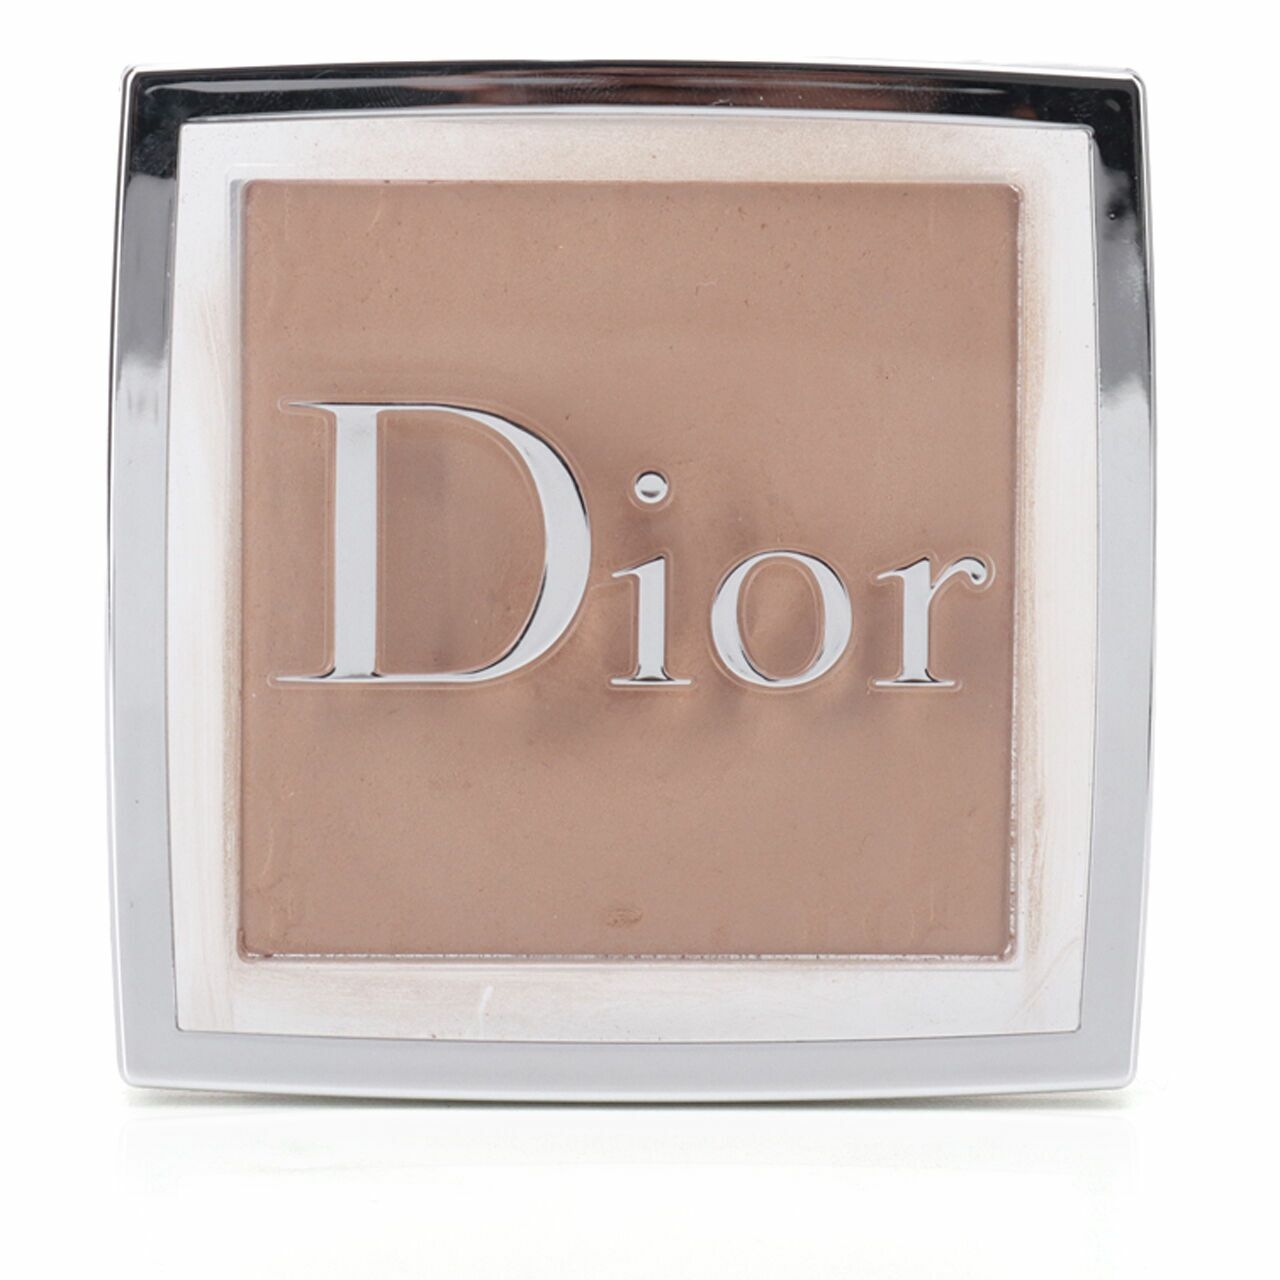 Christian Dior Backstage Face & Body Powder-No-Powder - 2N Neutral Faces